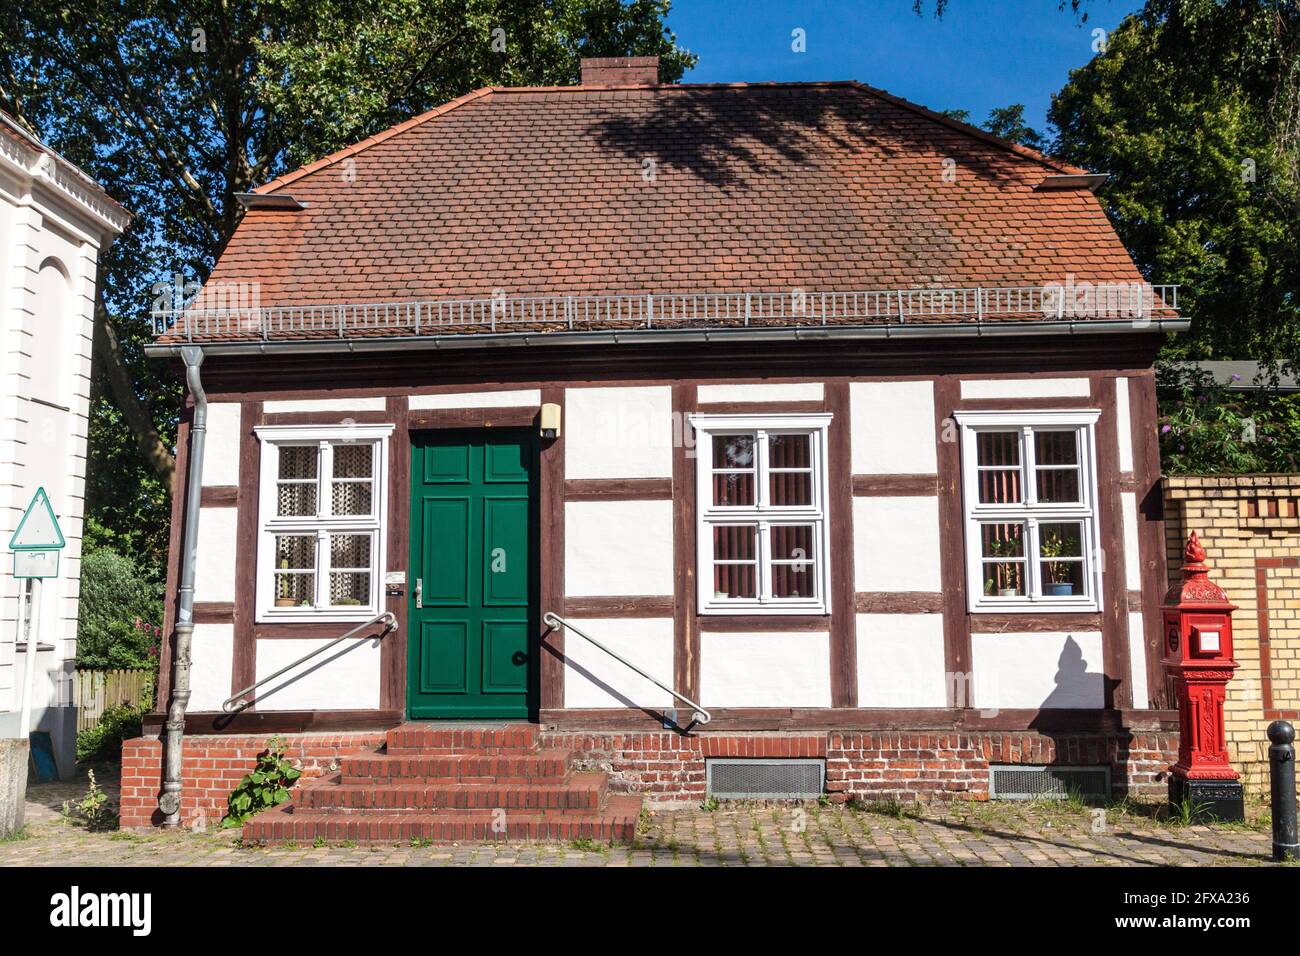 Half-timbered house in Spandau neighborhood of Berlin, Germany Stock Photo